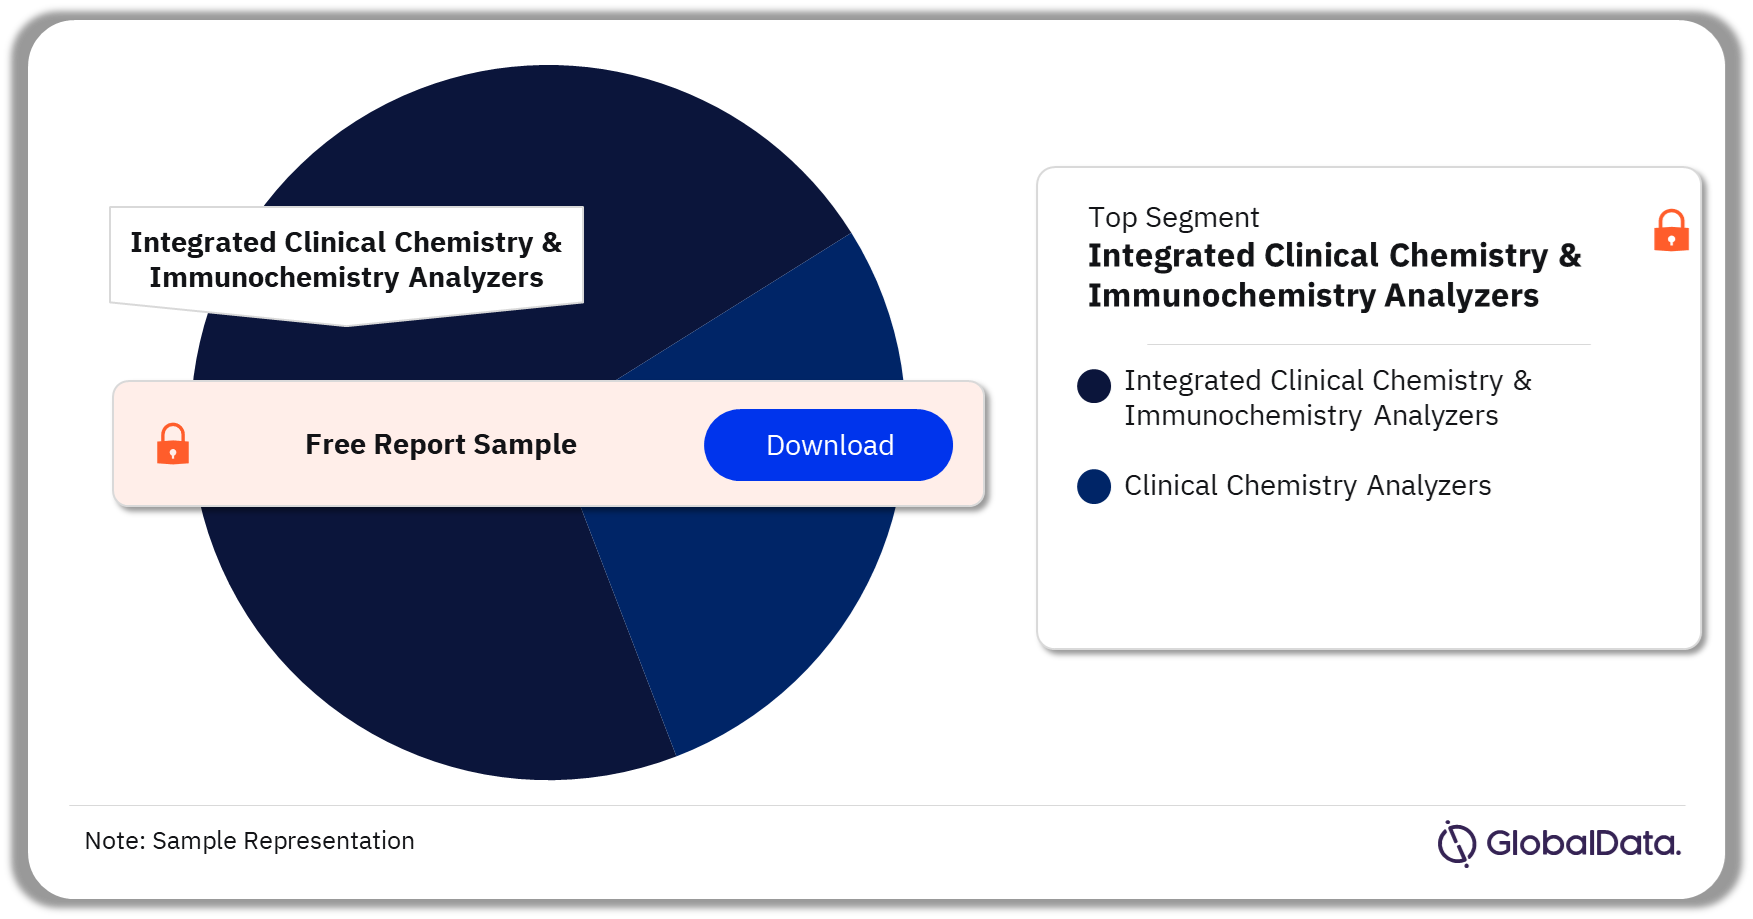 Clinical Chemistry Analyzers Market Analysis, by Segments 2023 (%)